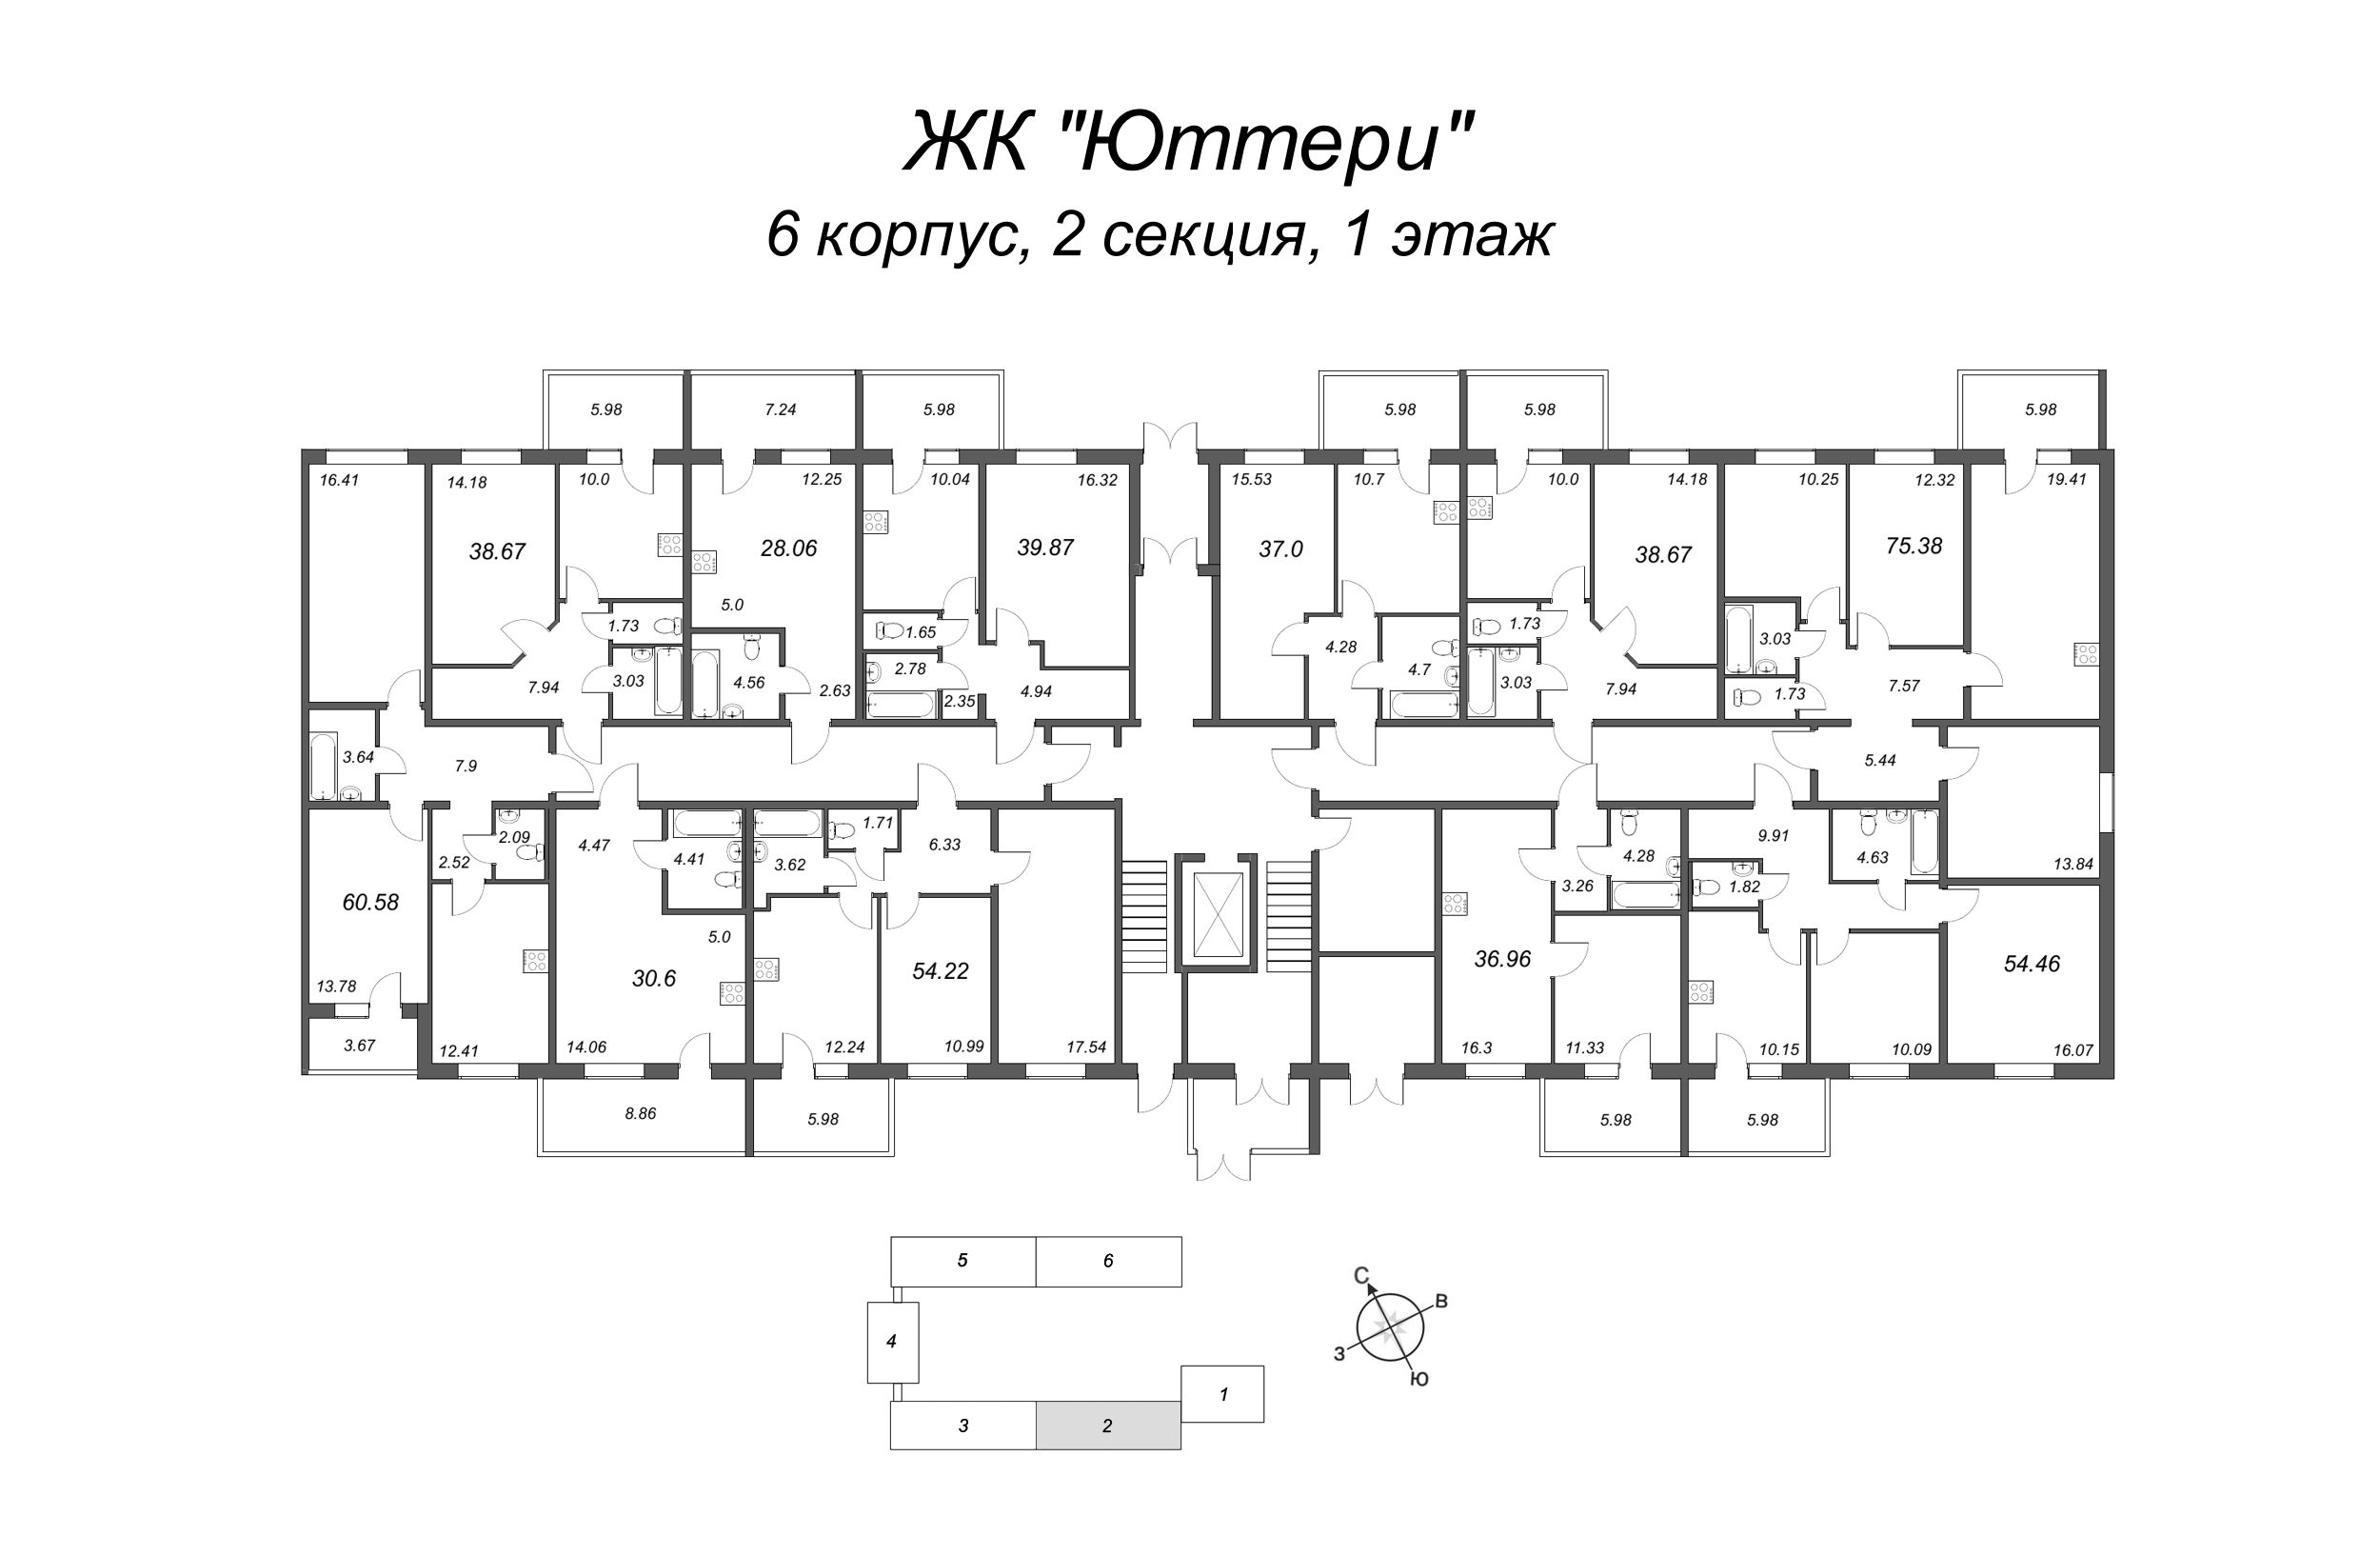 4-комнатная (Евро) квартира, 73.59 м² - планировка этажа